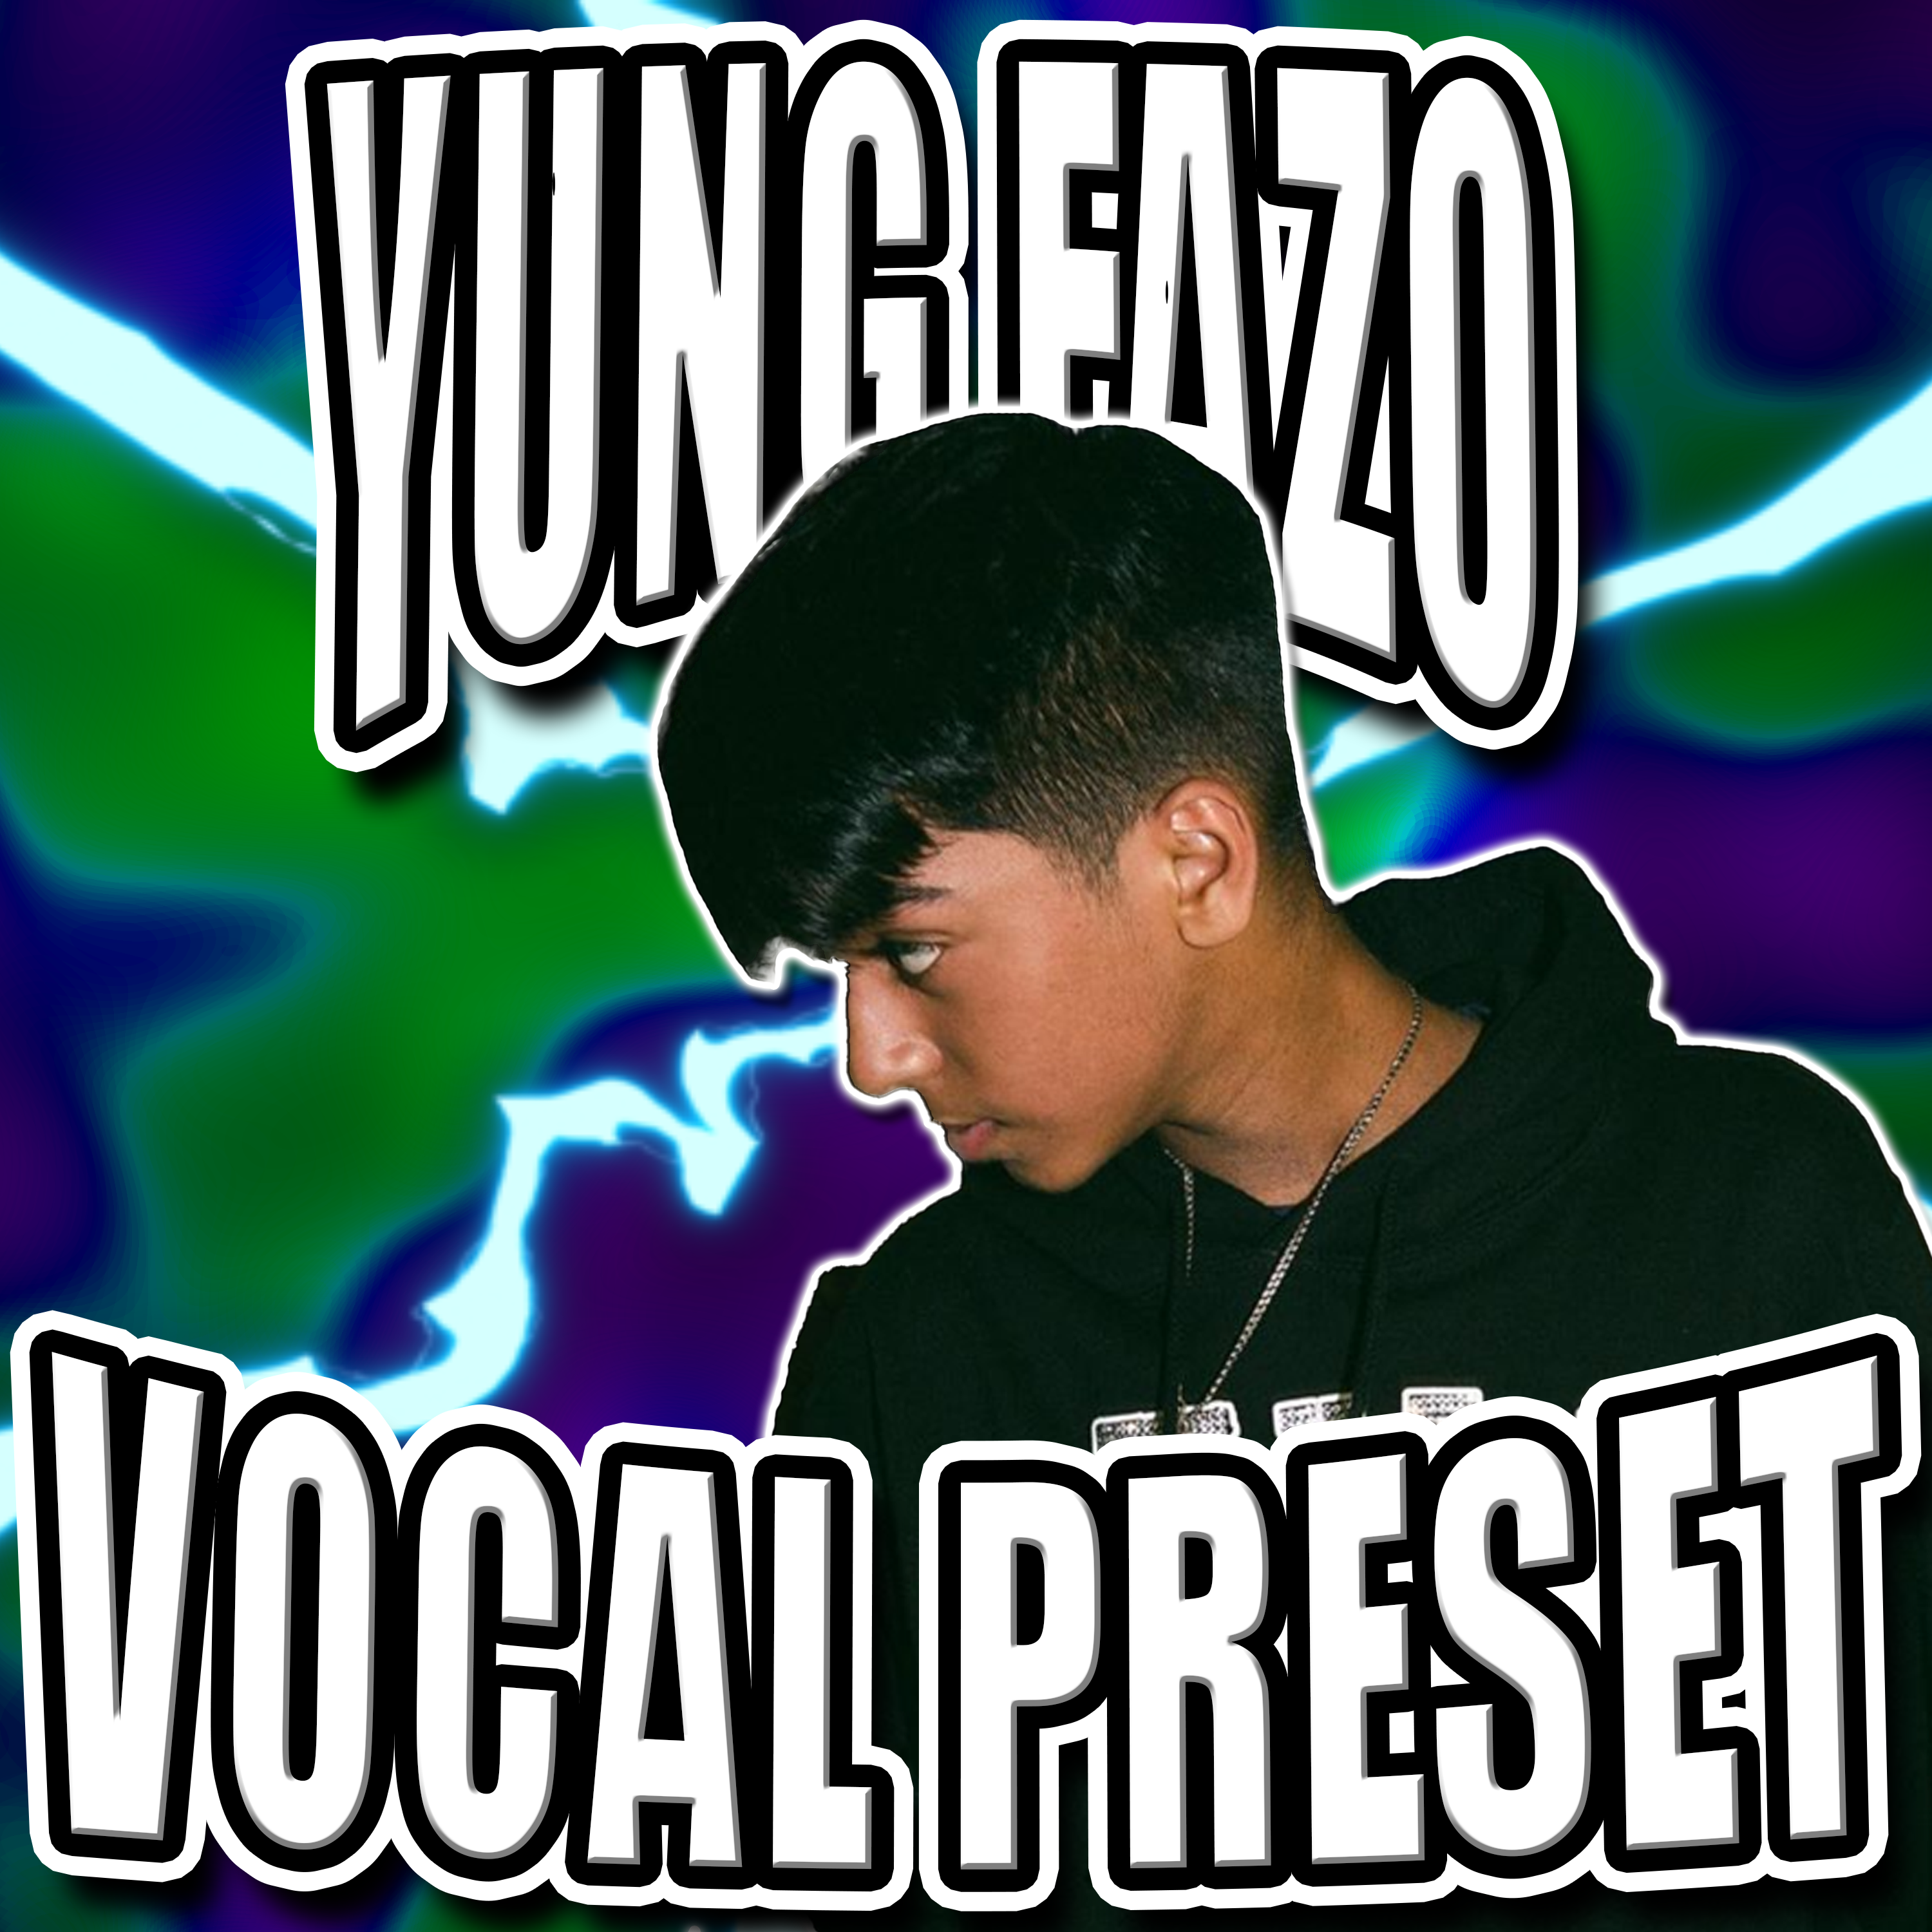 The Yung Fazo Vocal Preset